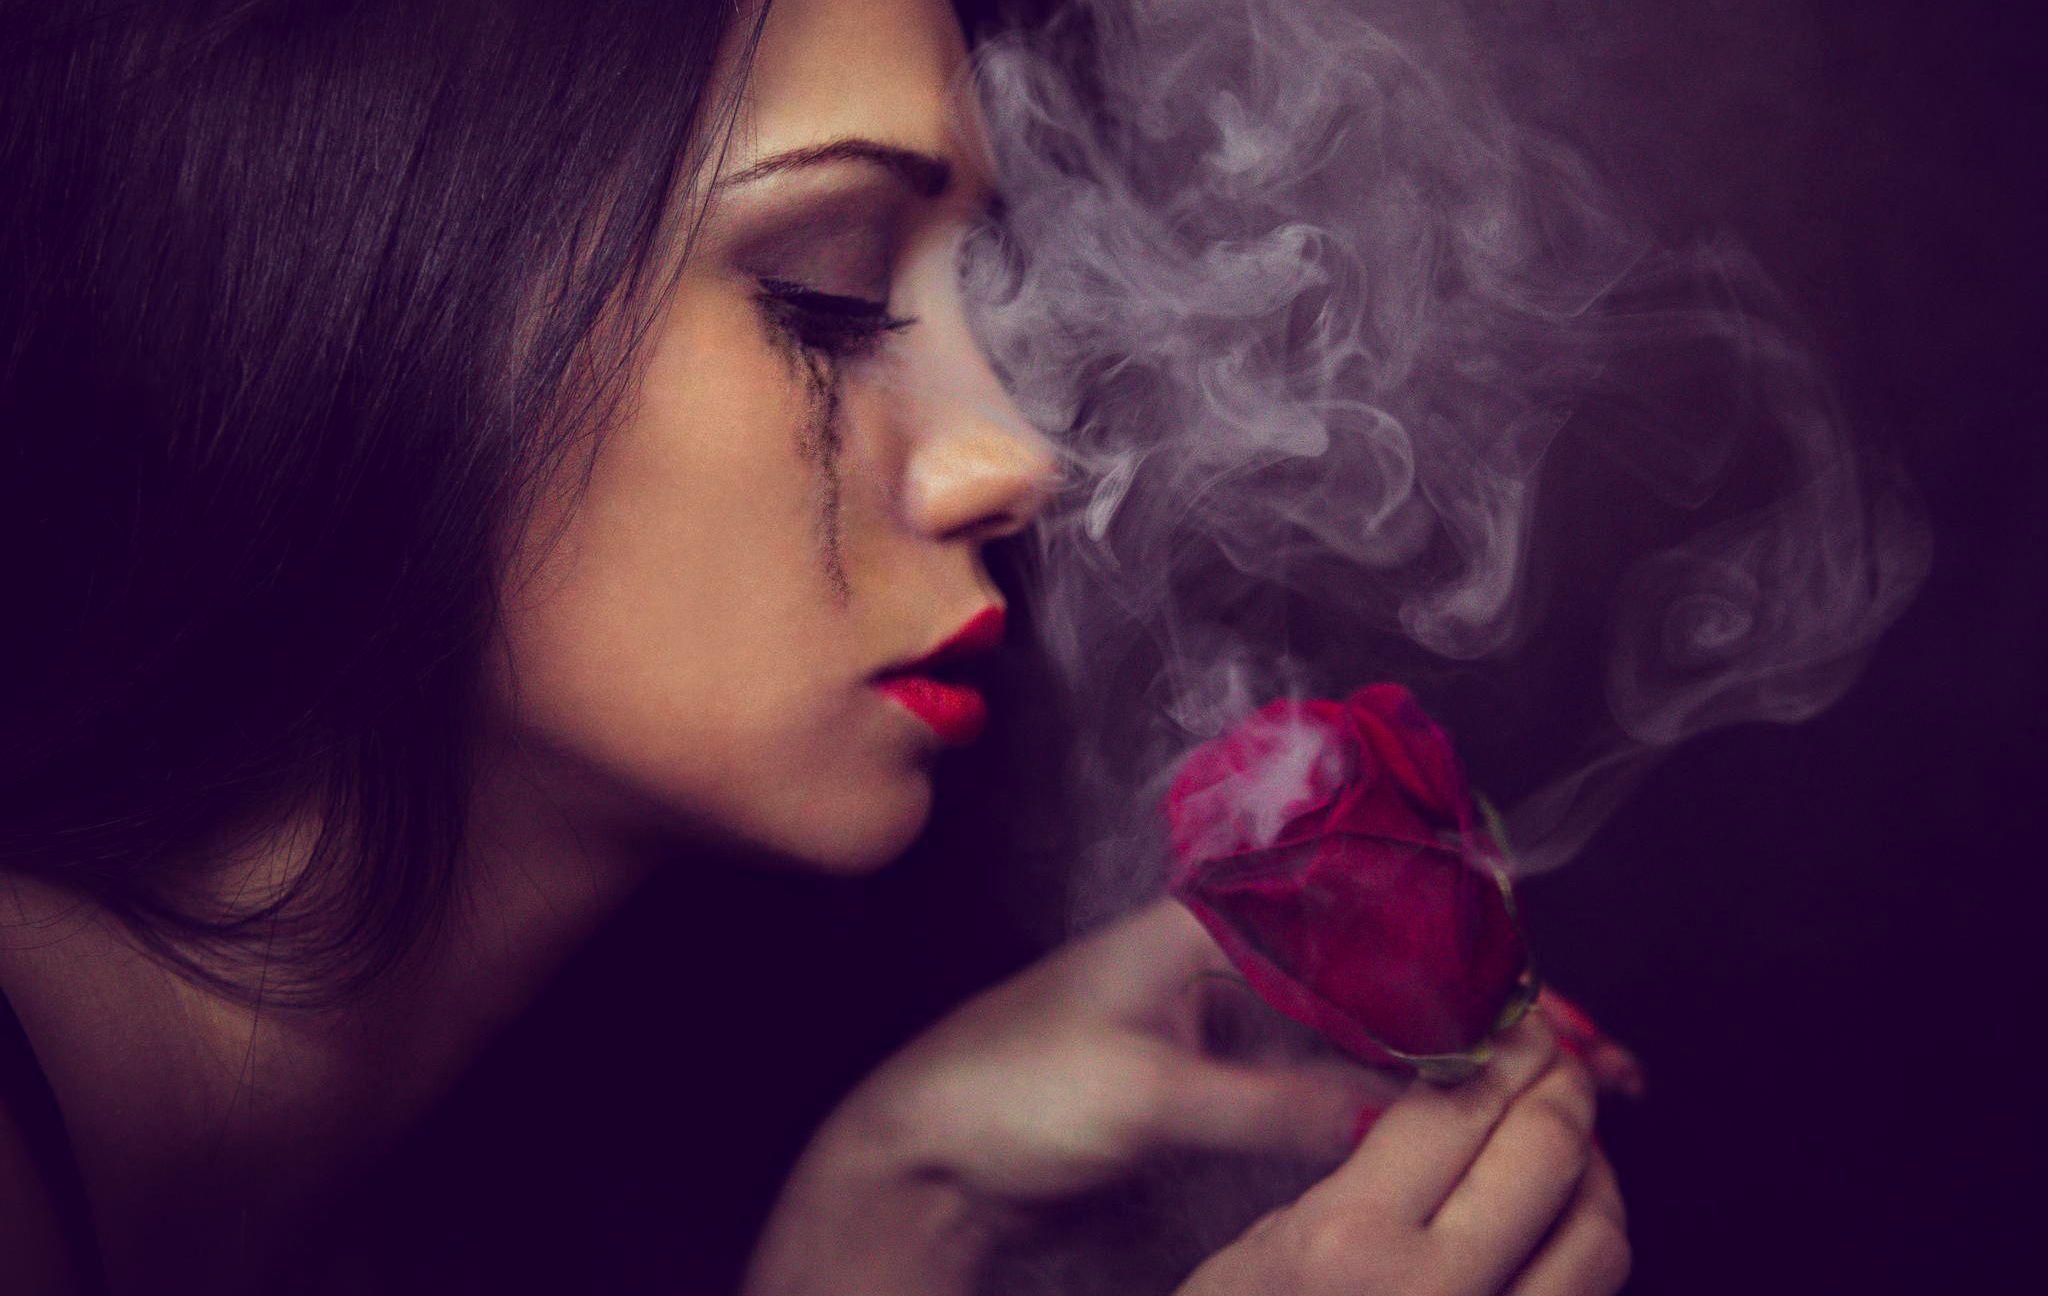 lips, petals, roses, face, Female, tears, rose, woman, beauty, smoke